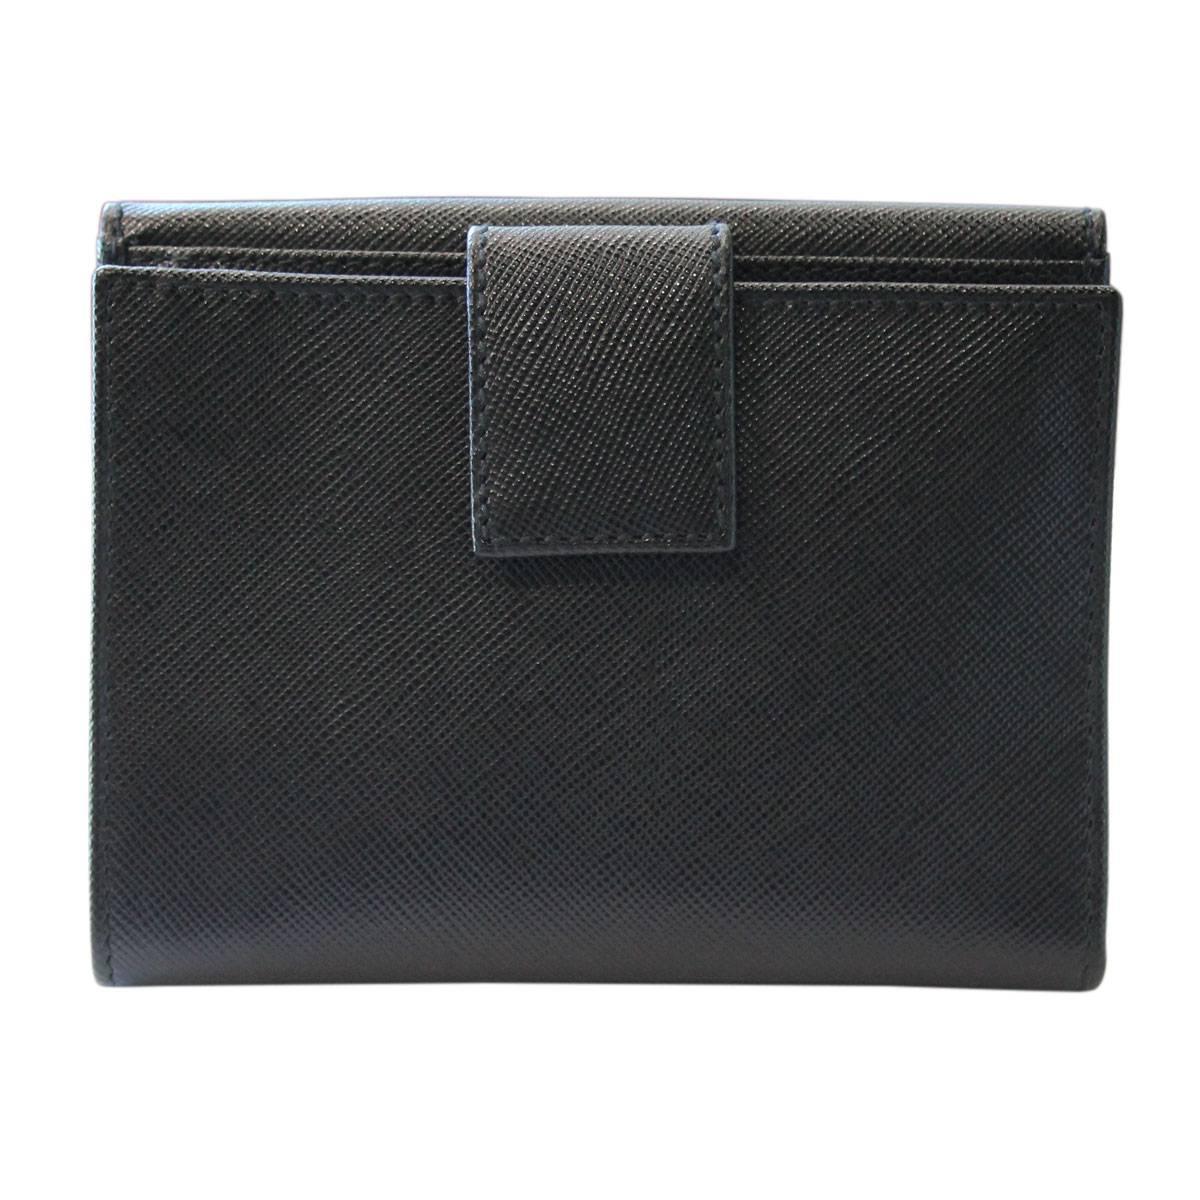 Prada Black Saffiano Leather Bi-Fold Wallet in Box at 1stdibs  